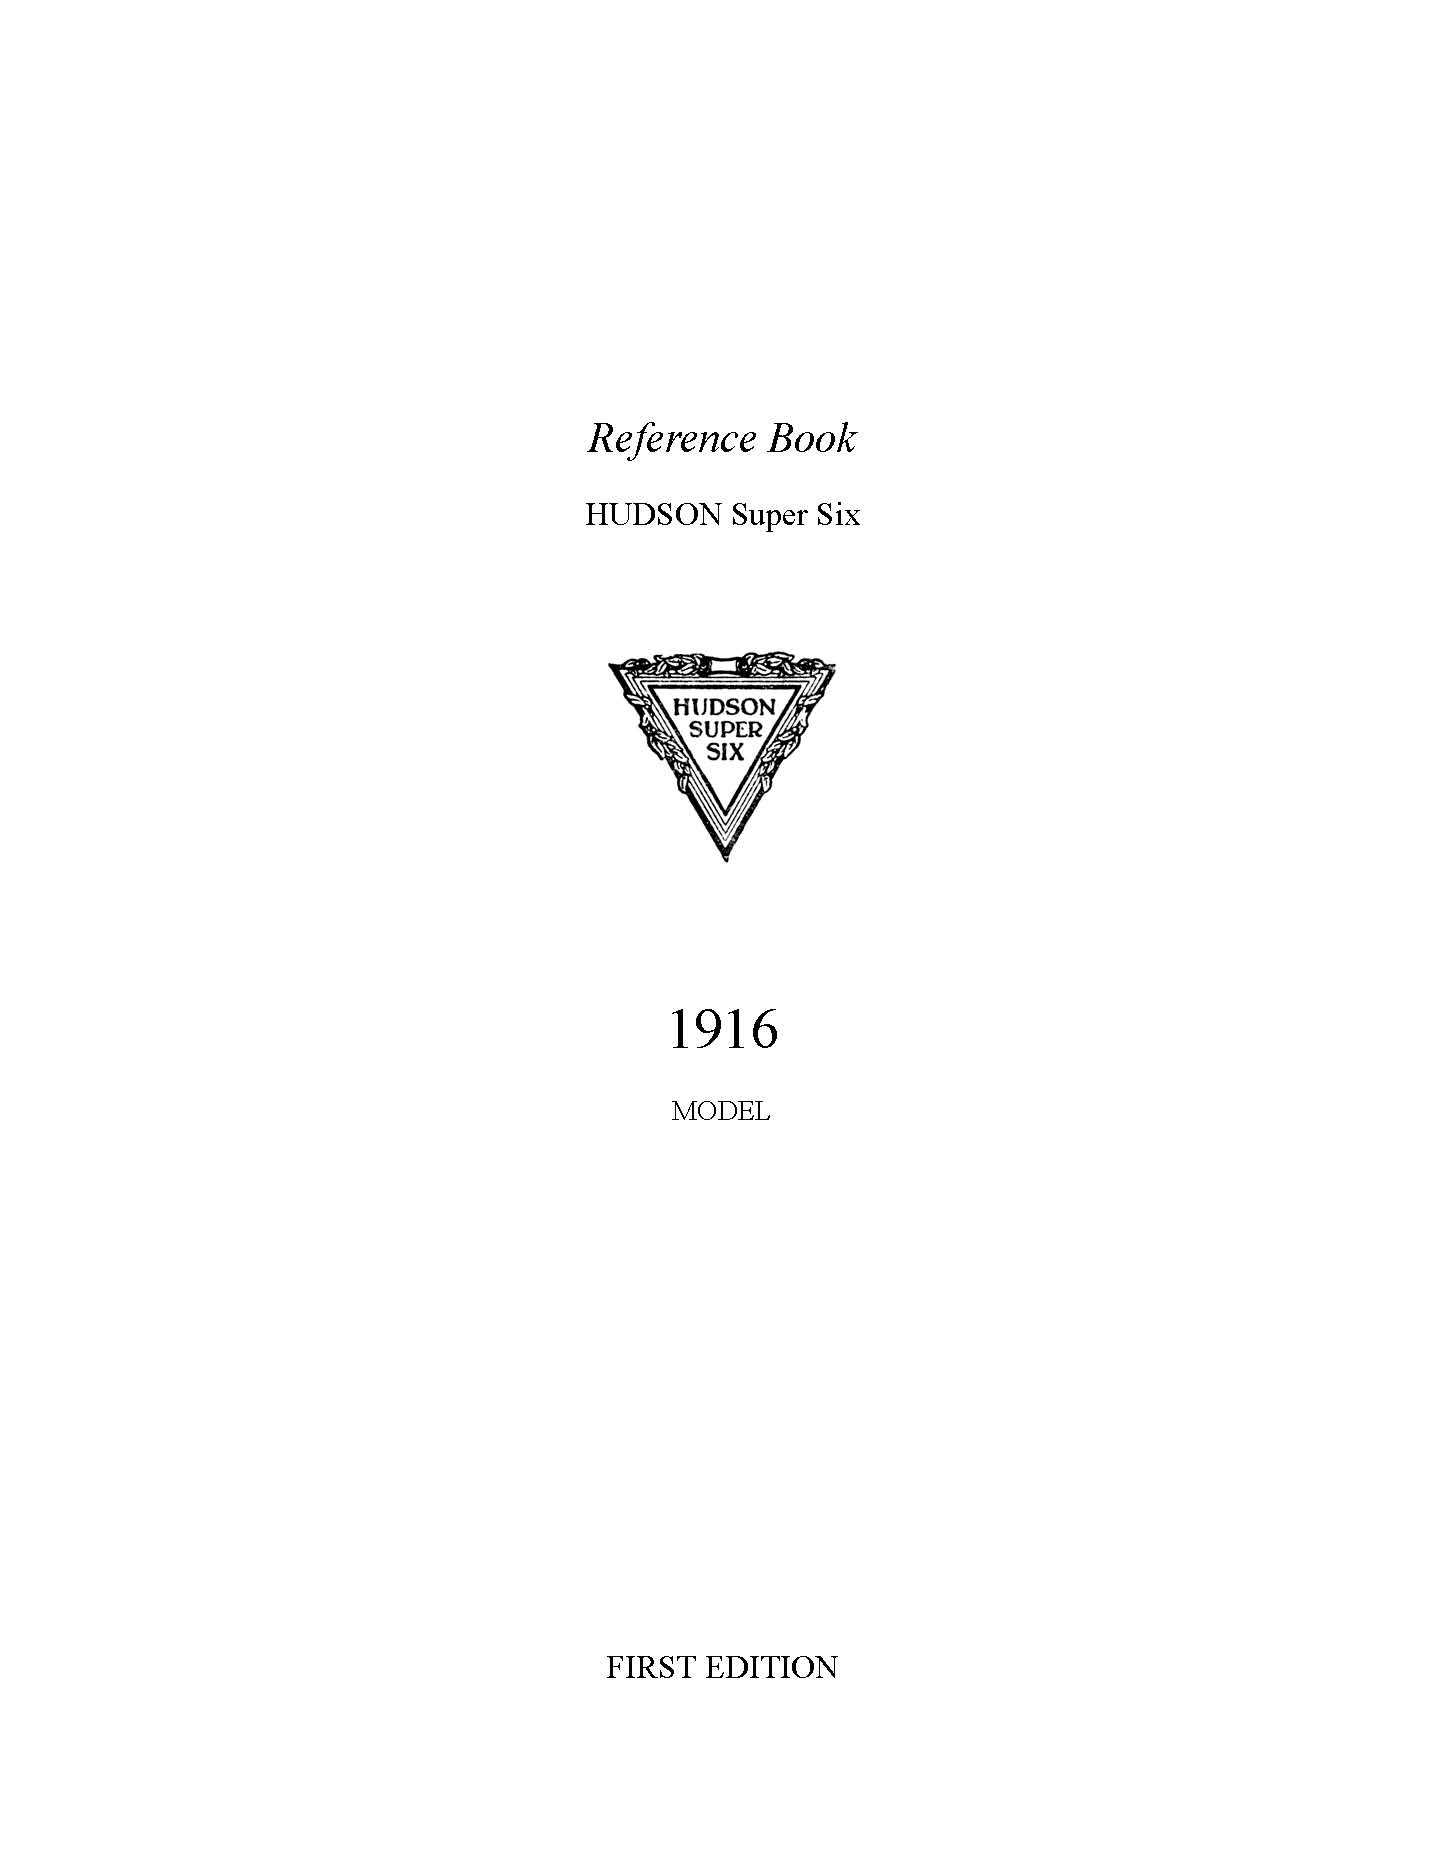 1916 Hudson Super-Six Reference Book